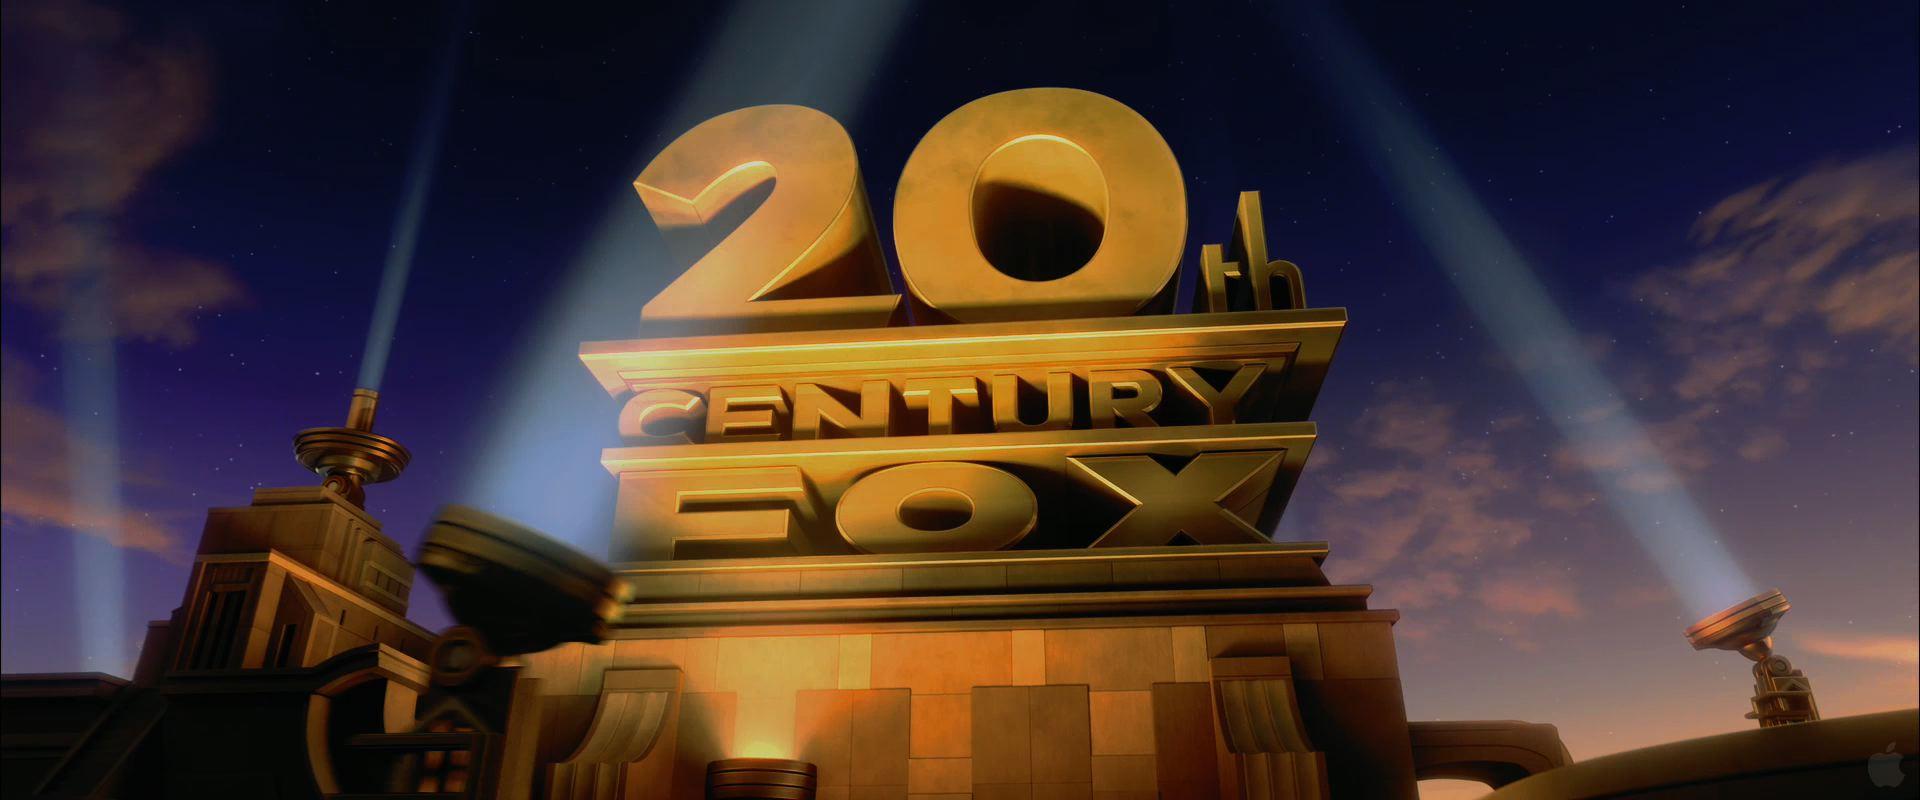 Th Century Fox Logo Wallpapers